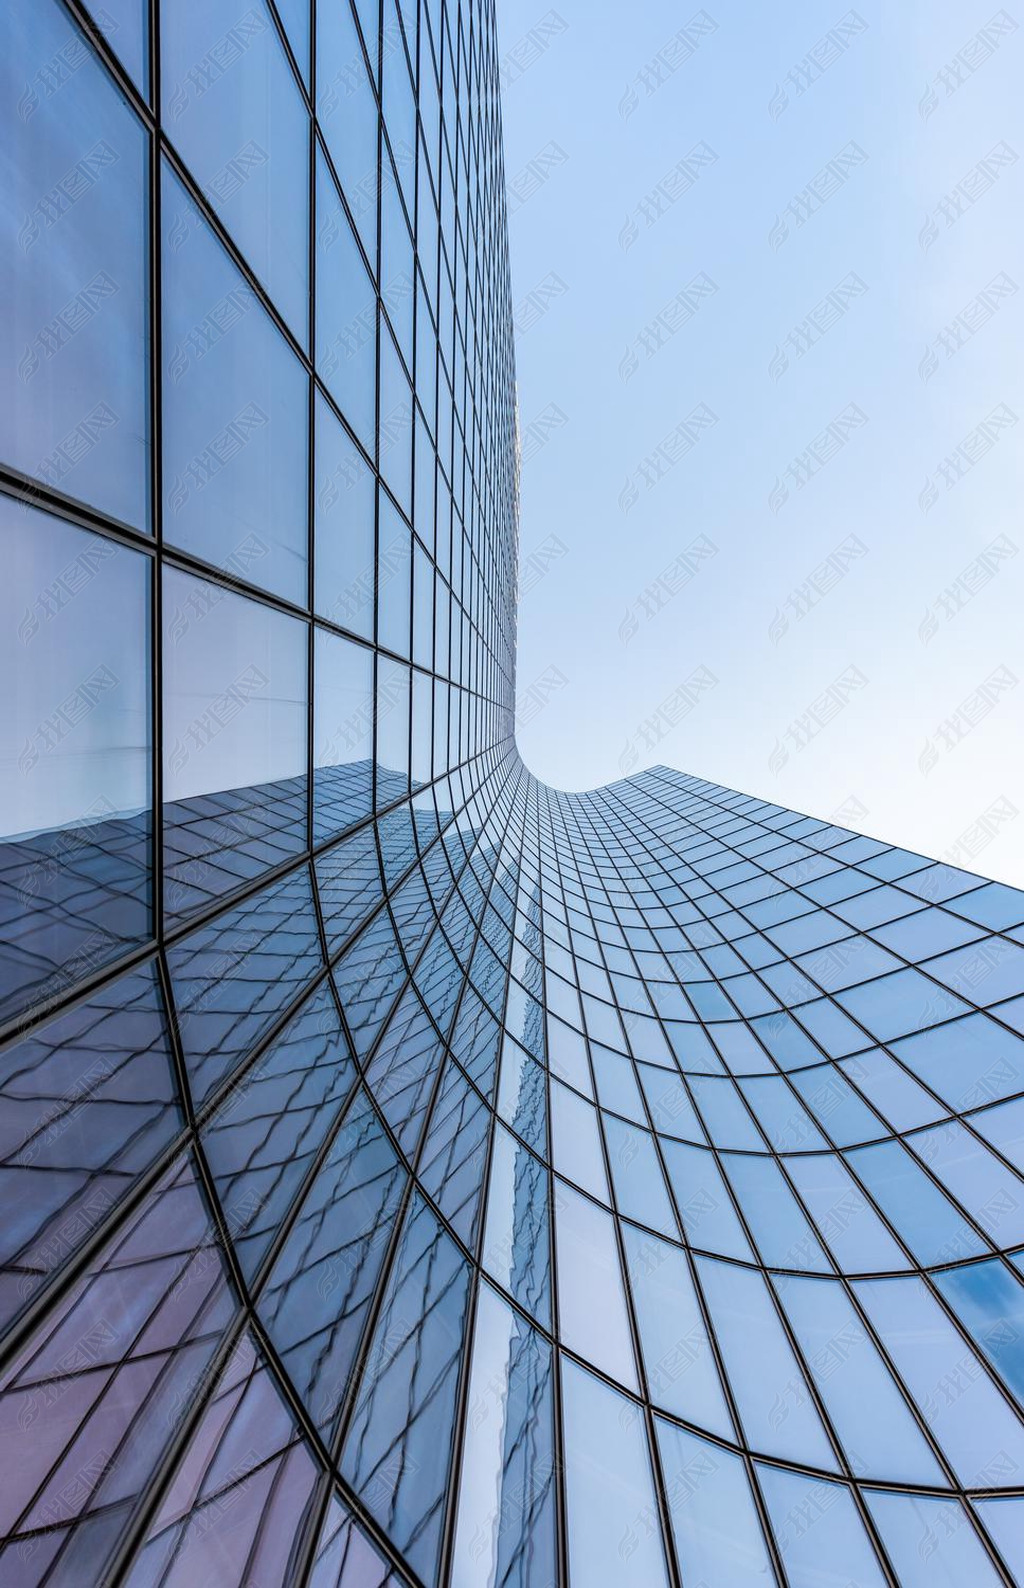 Blue curved glass skyscraper facade against sky